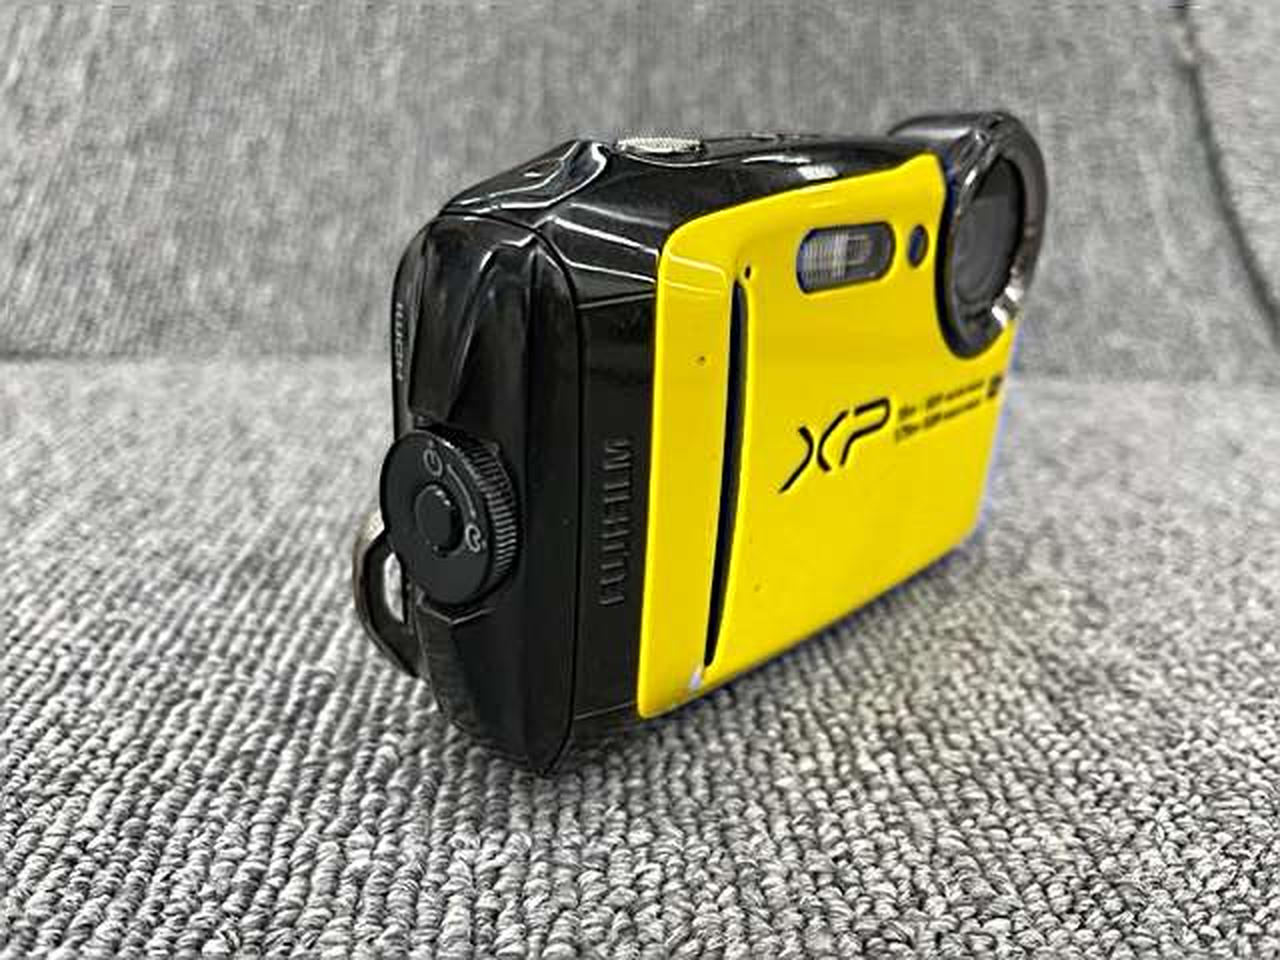 FUJIFILM Digital Camera Model number: FINEPIX XP90 Used in Japan